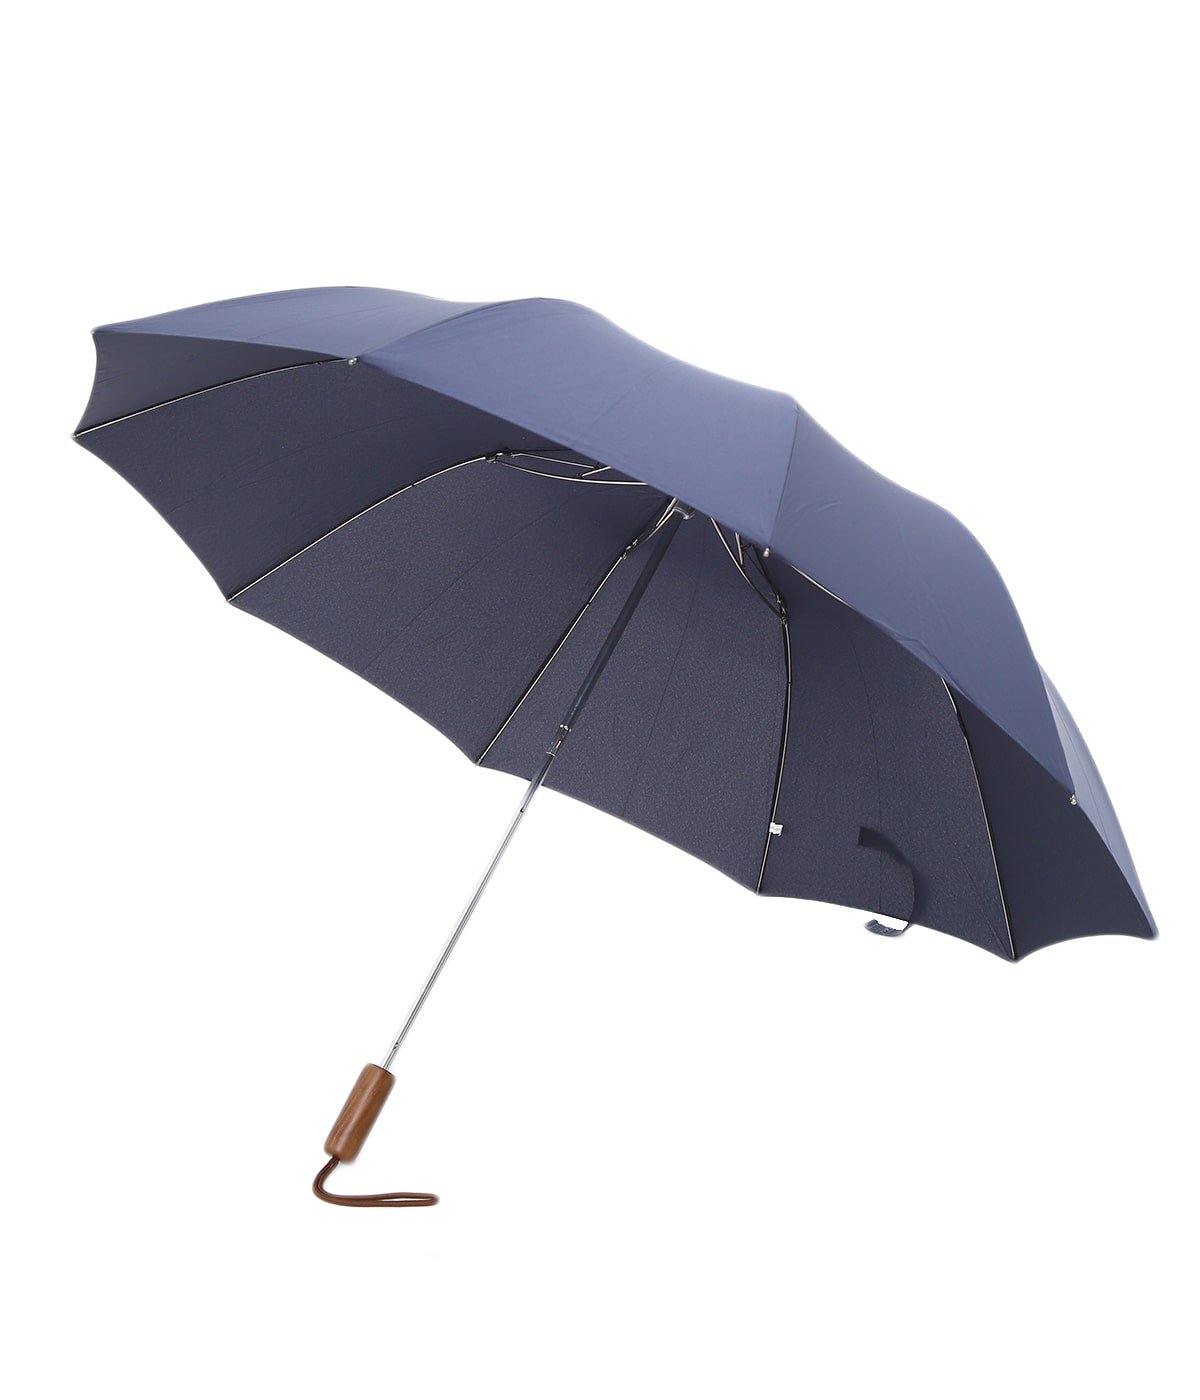 【ONLY ARK】別注 TELESCOPIC UMBLELLA-Maple Straight / 折りたたみ傘 雨用